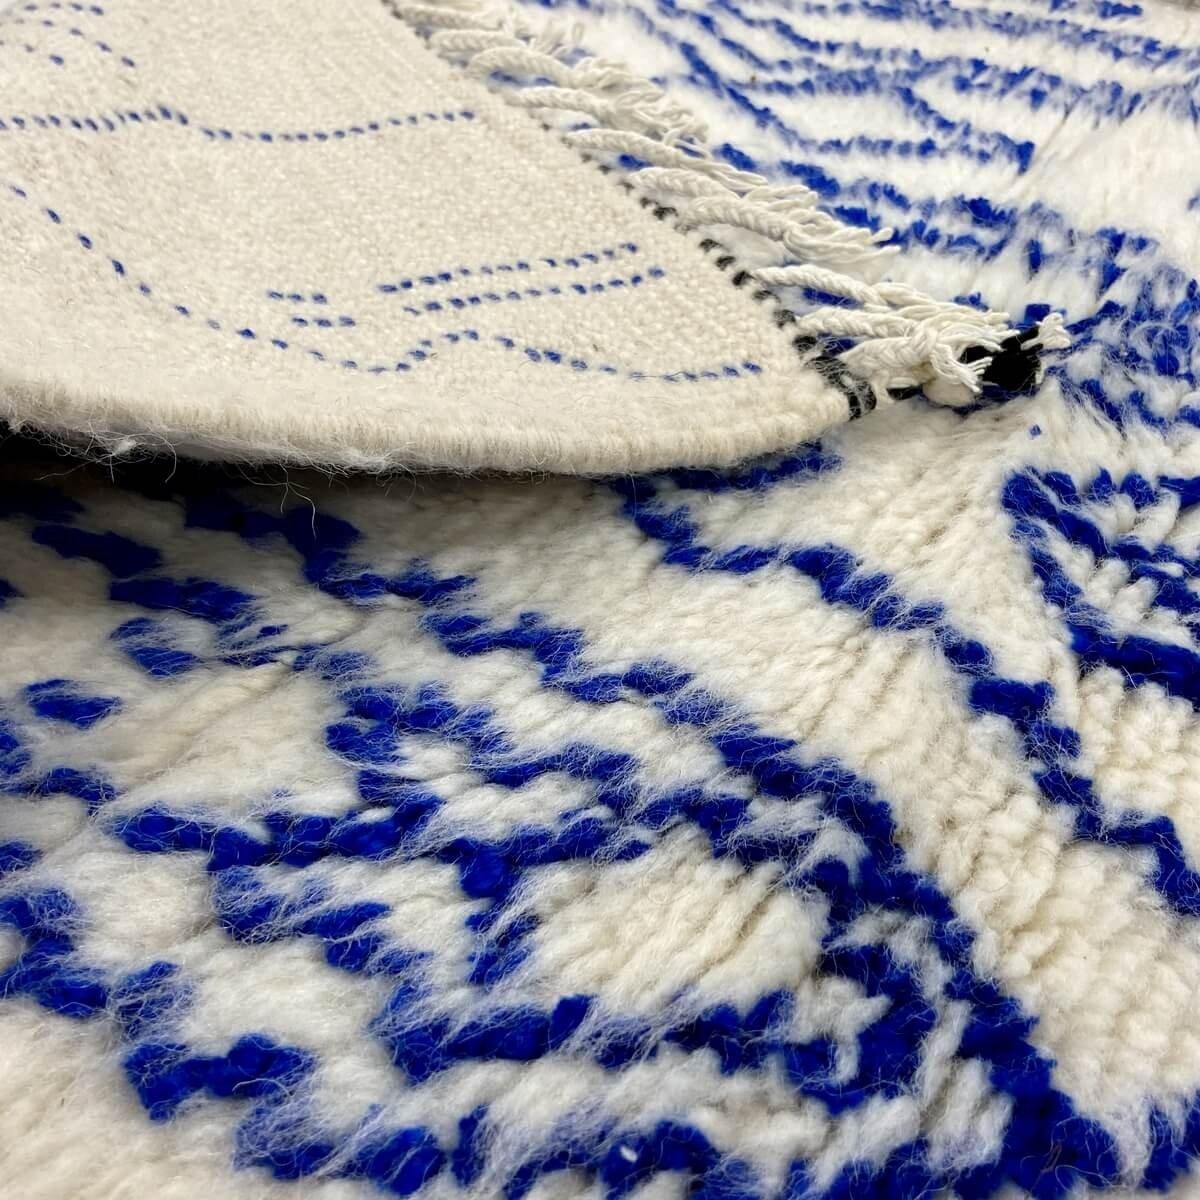 Berber carpet Rug Azilal Oukwes 80x135 cm White and Blue (Handmade, Wool, Morocco) Tunisian margoum rug from the city of Kairoua